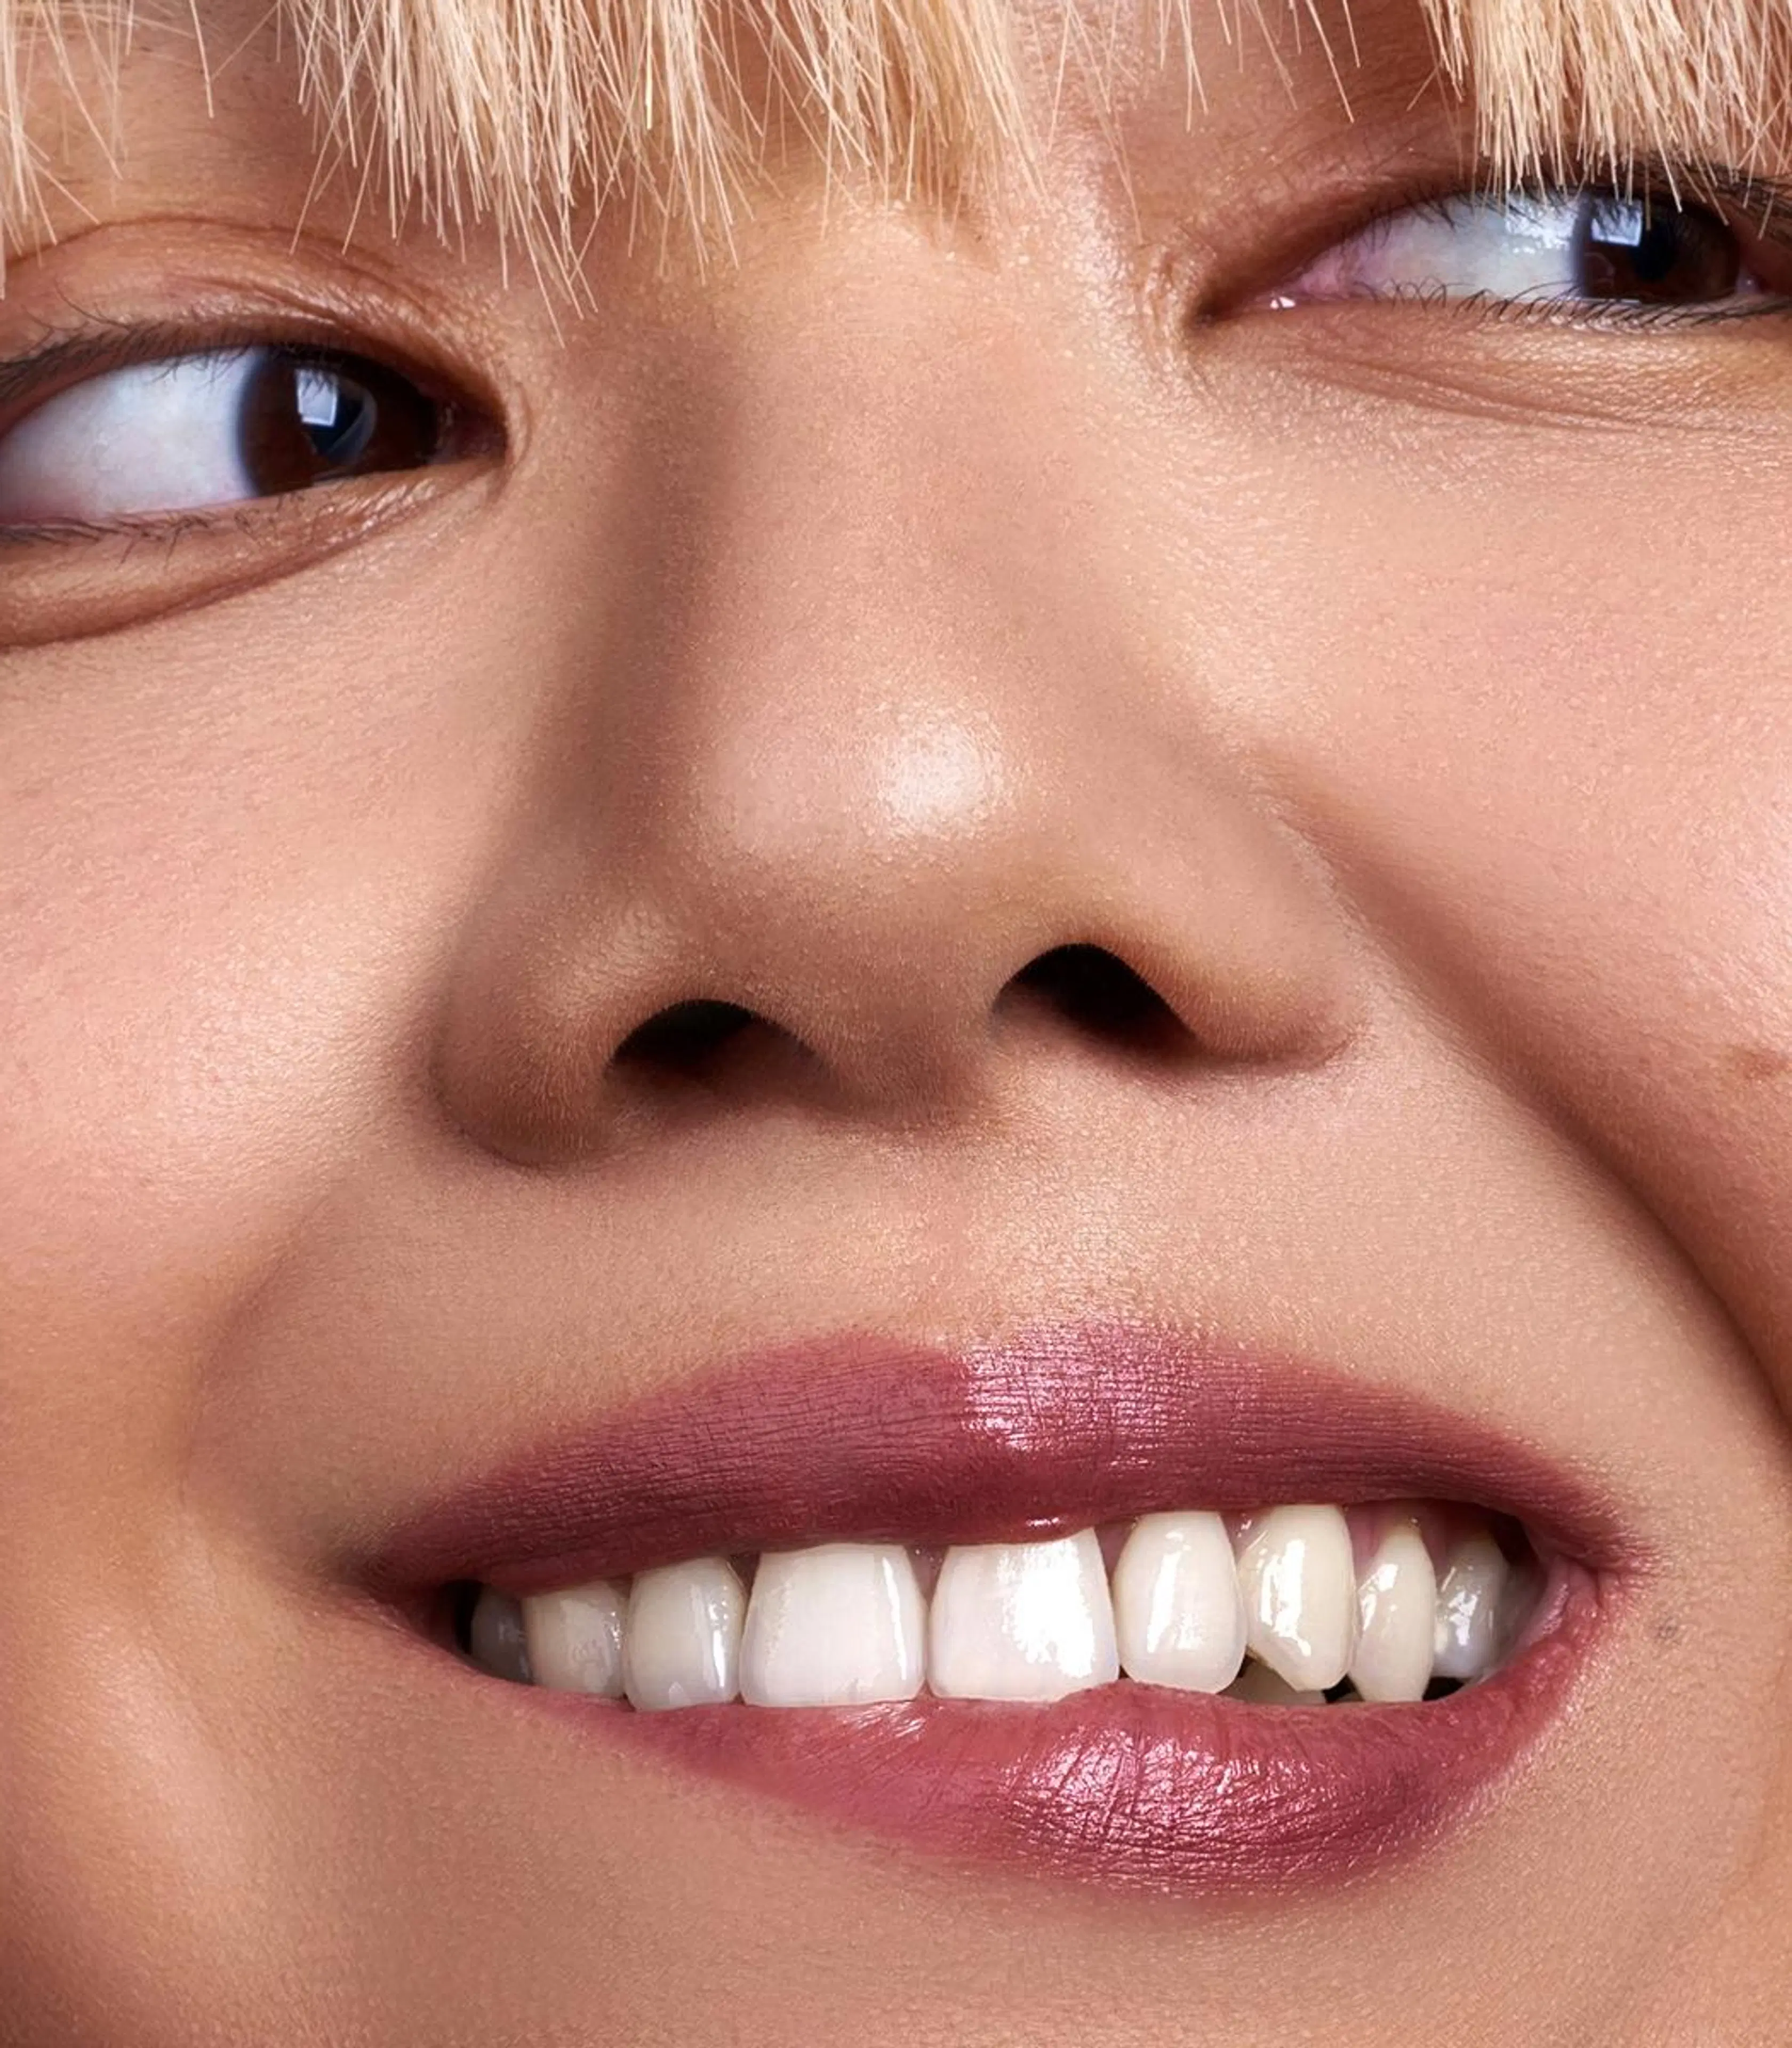 Madara Velvet Wear Lipstick huulipuna 3,8 g